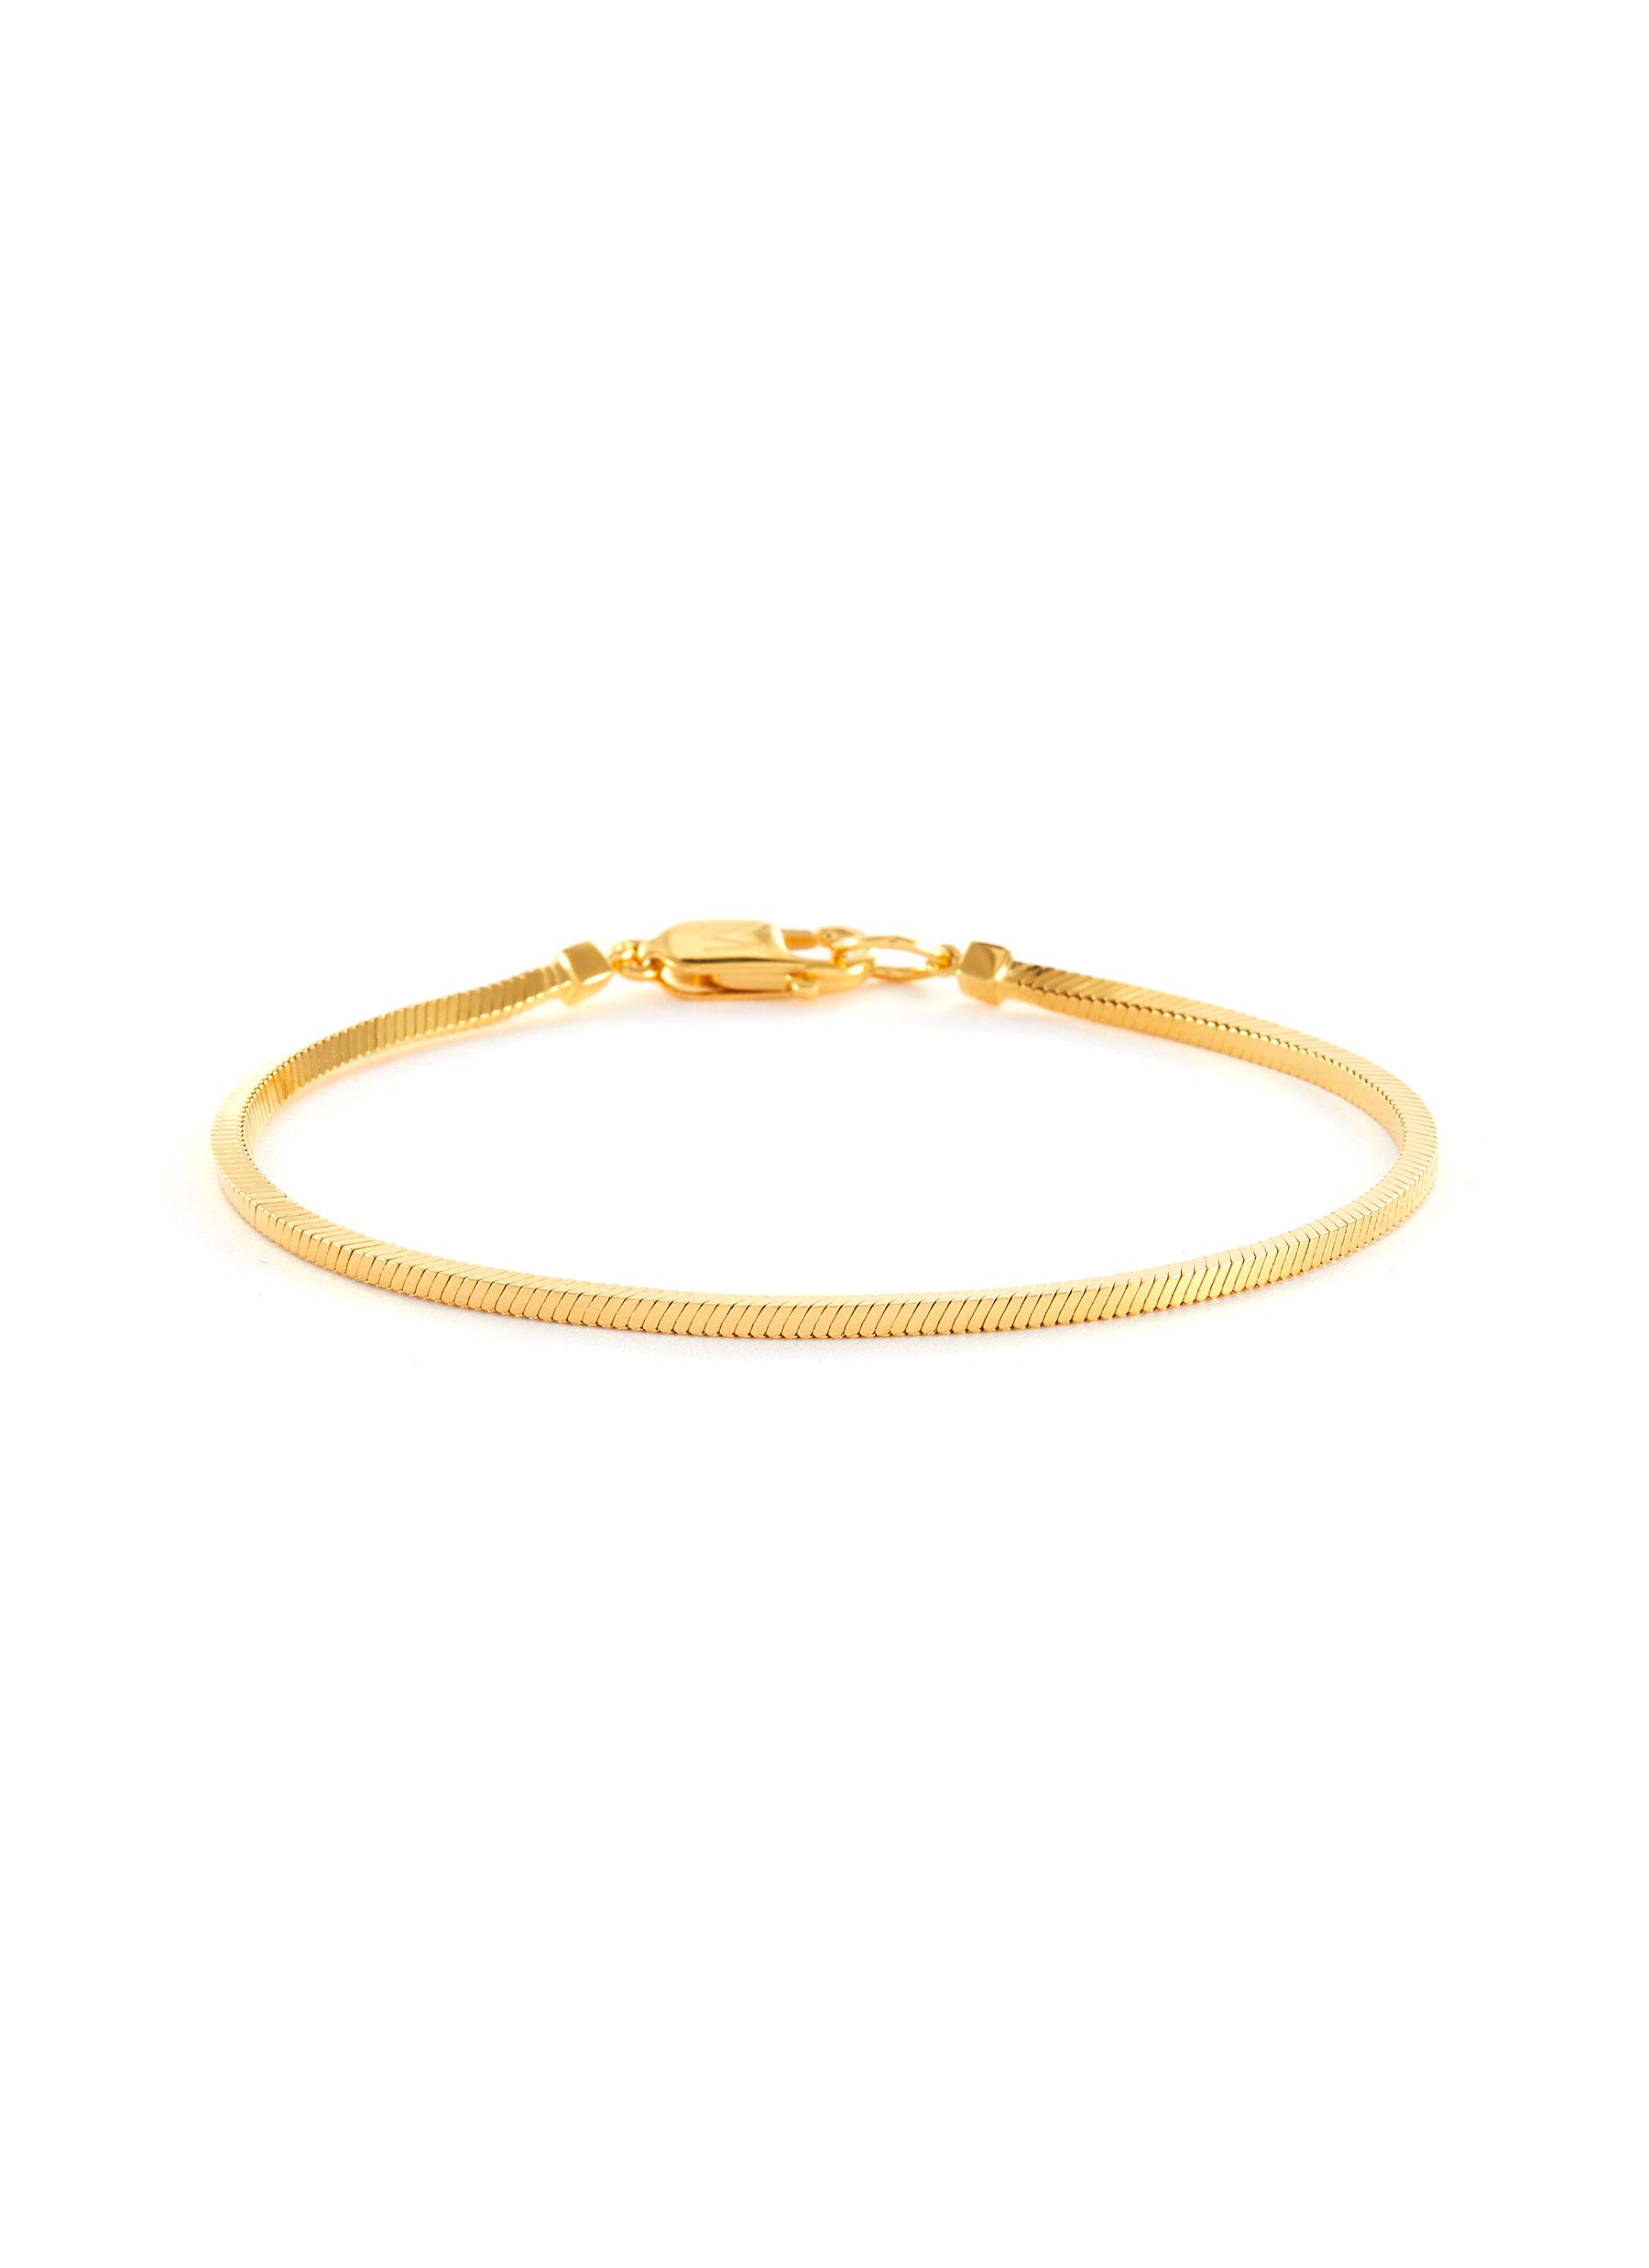 MISSOMA 'Lucy Williams' Square Snake Chain Gold Vermeil Bracelet